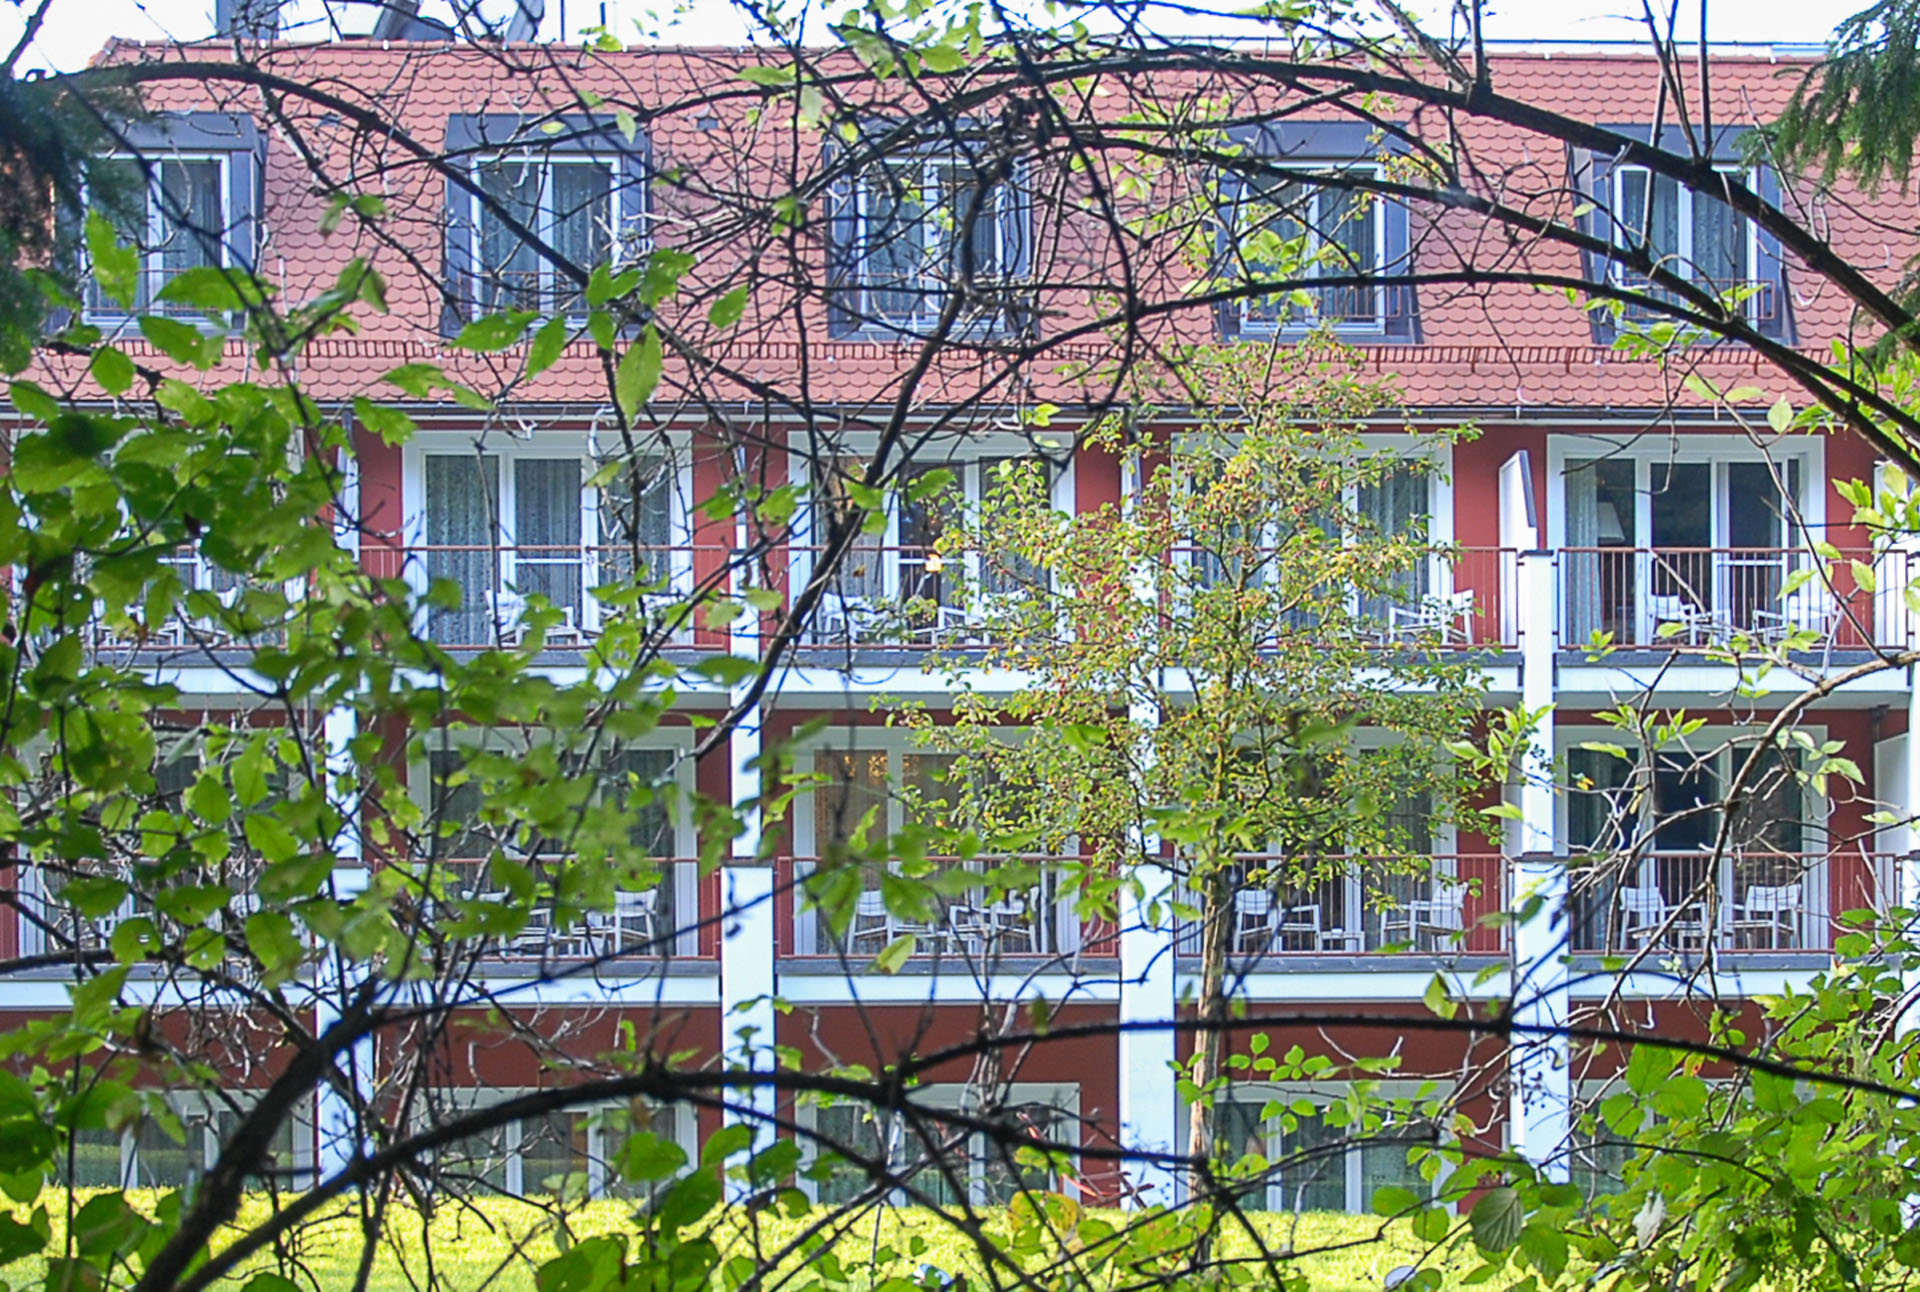 Waldhotel Stuttgart